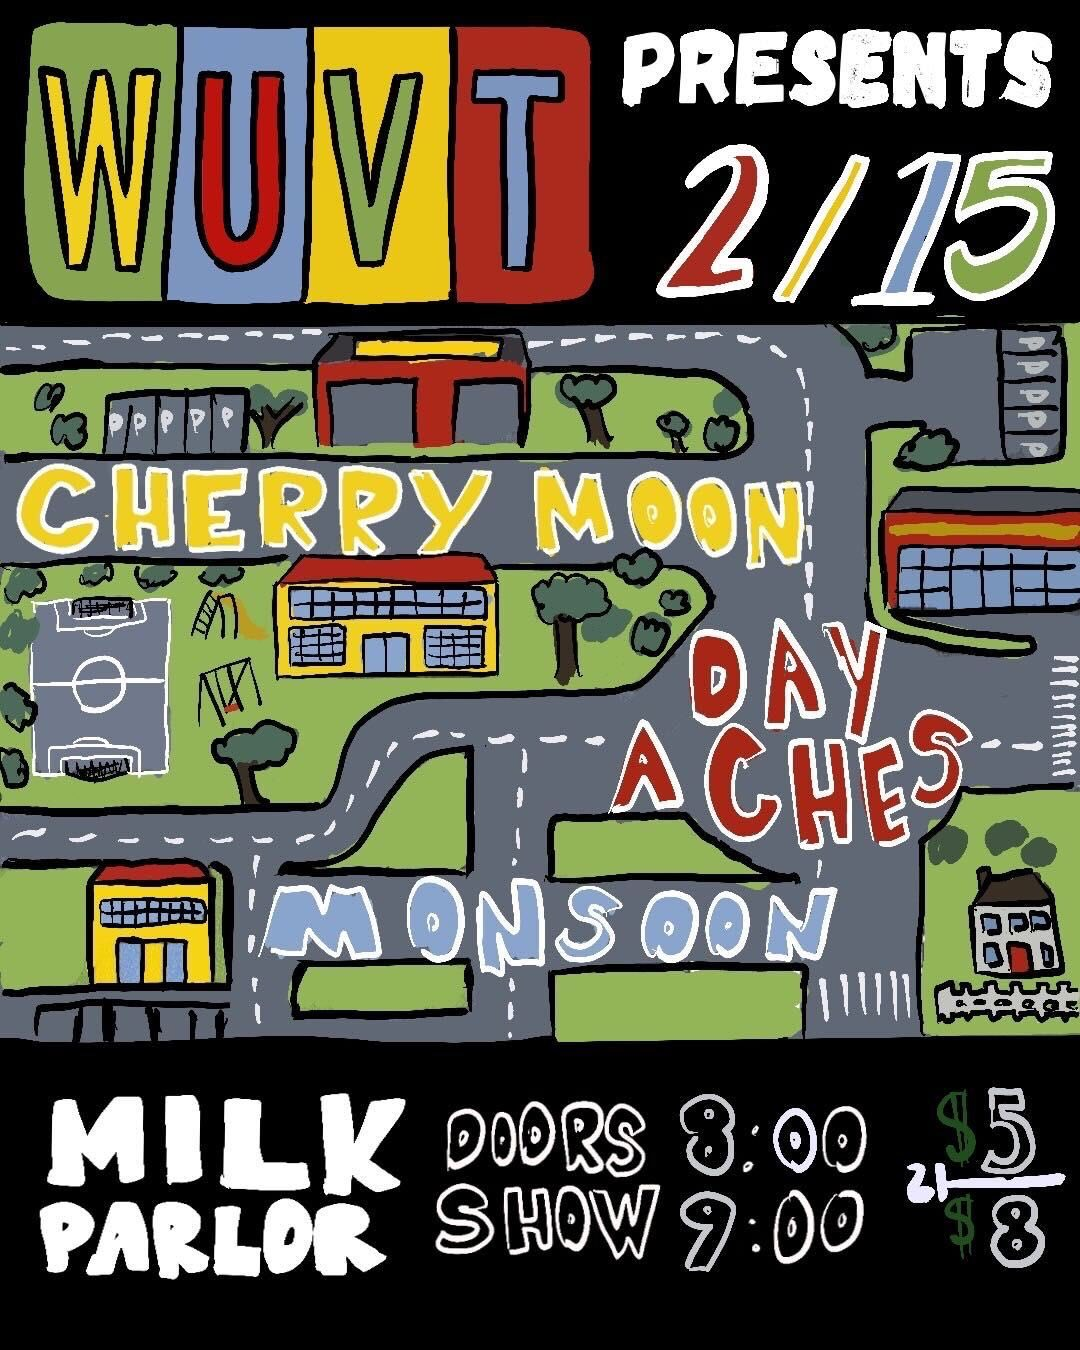 Milk Parlor Show cover